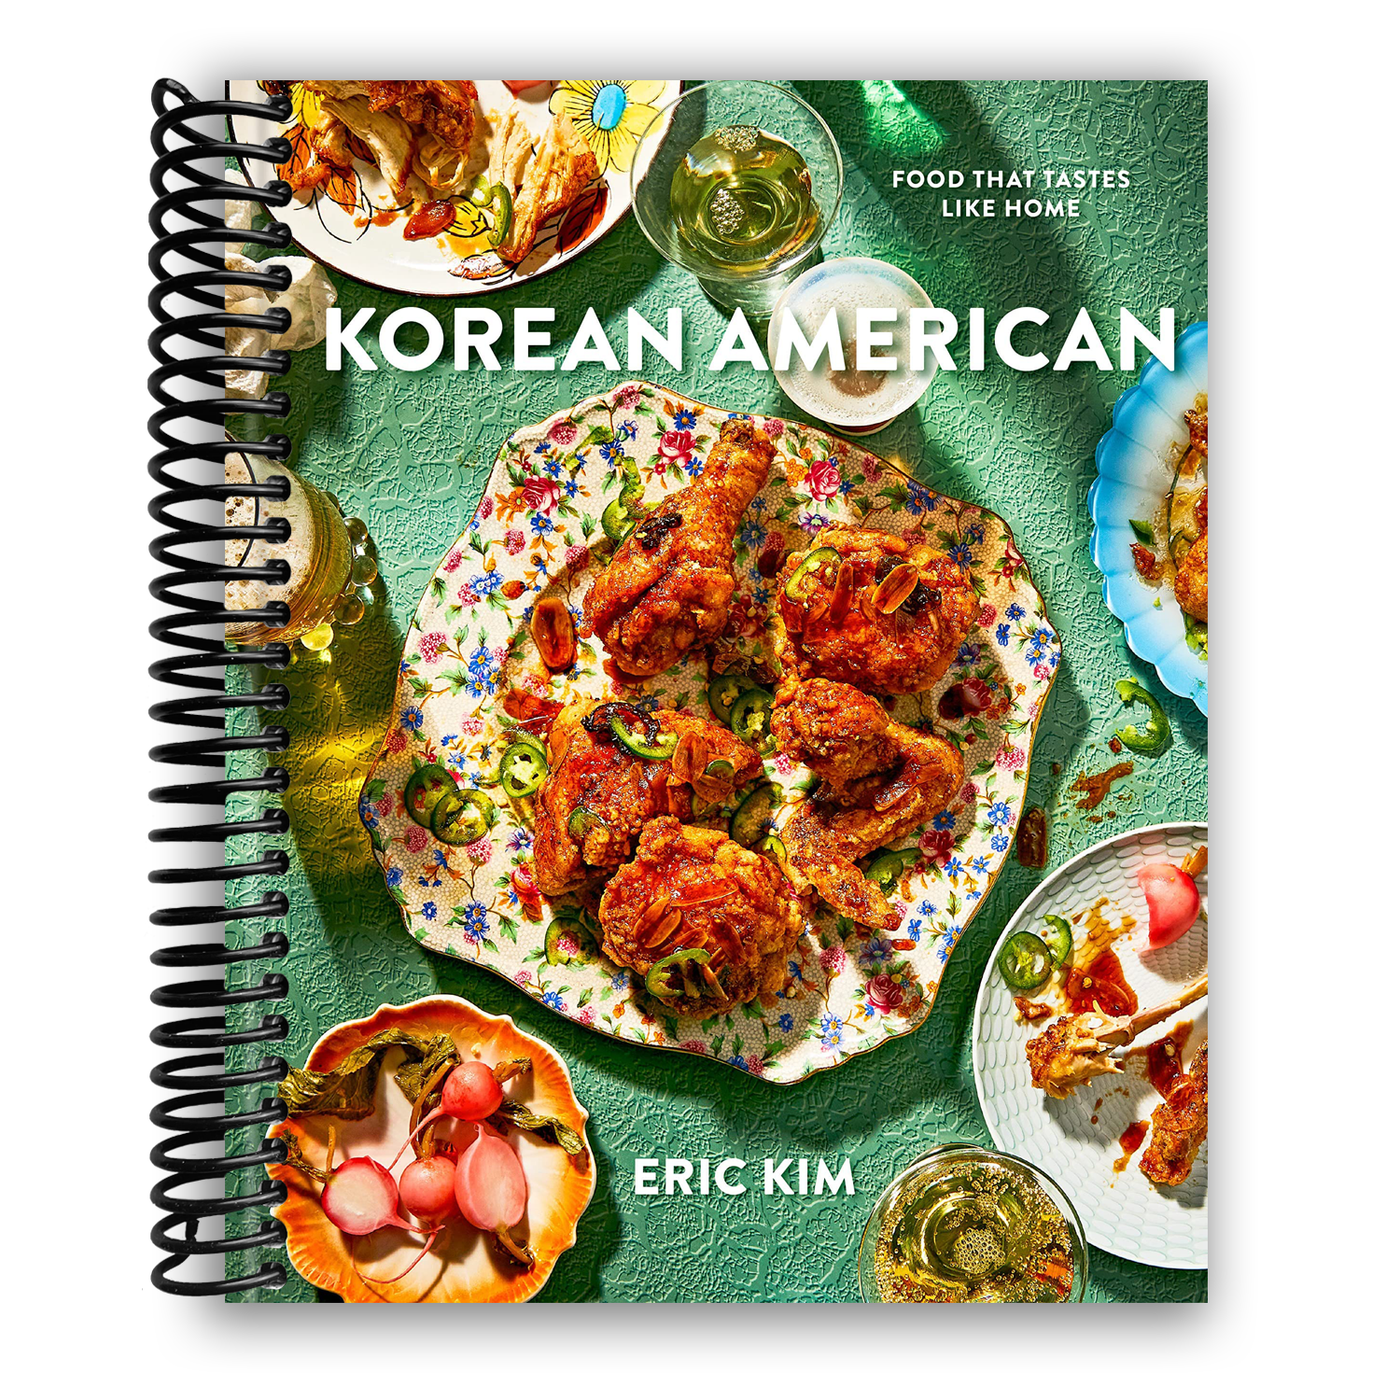 Korean American: Food That Tastes Like Home (Spiral Bound)